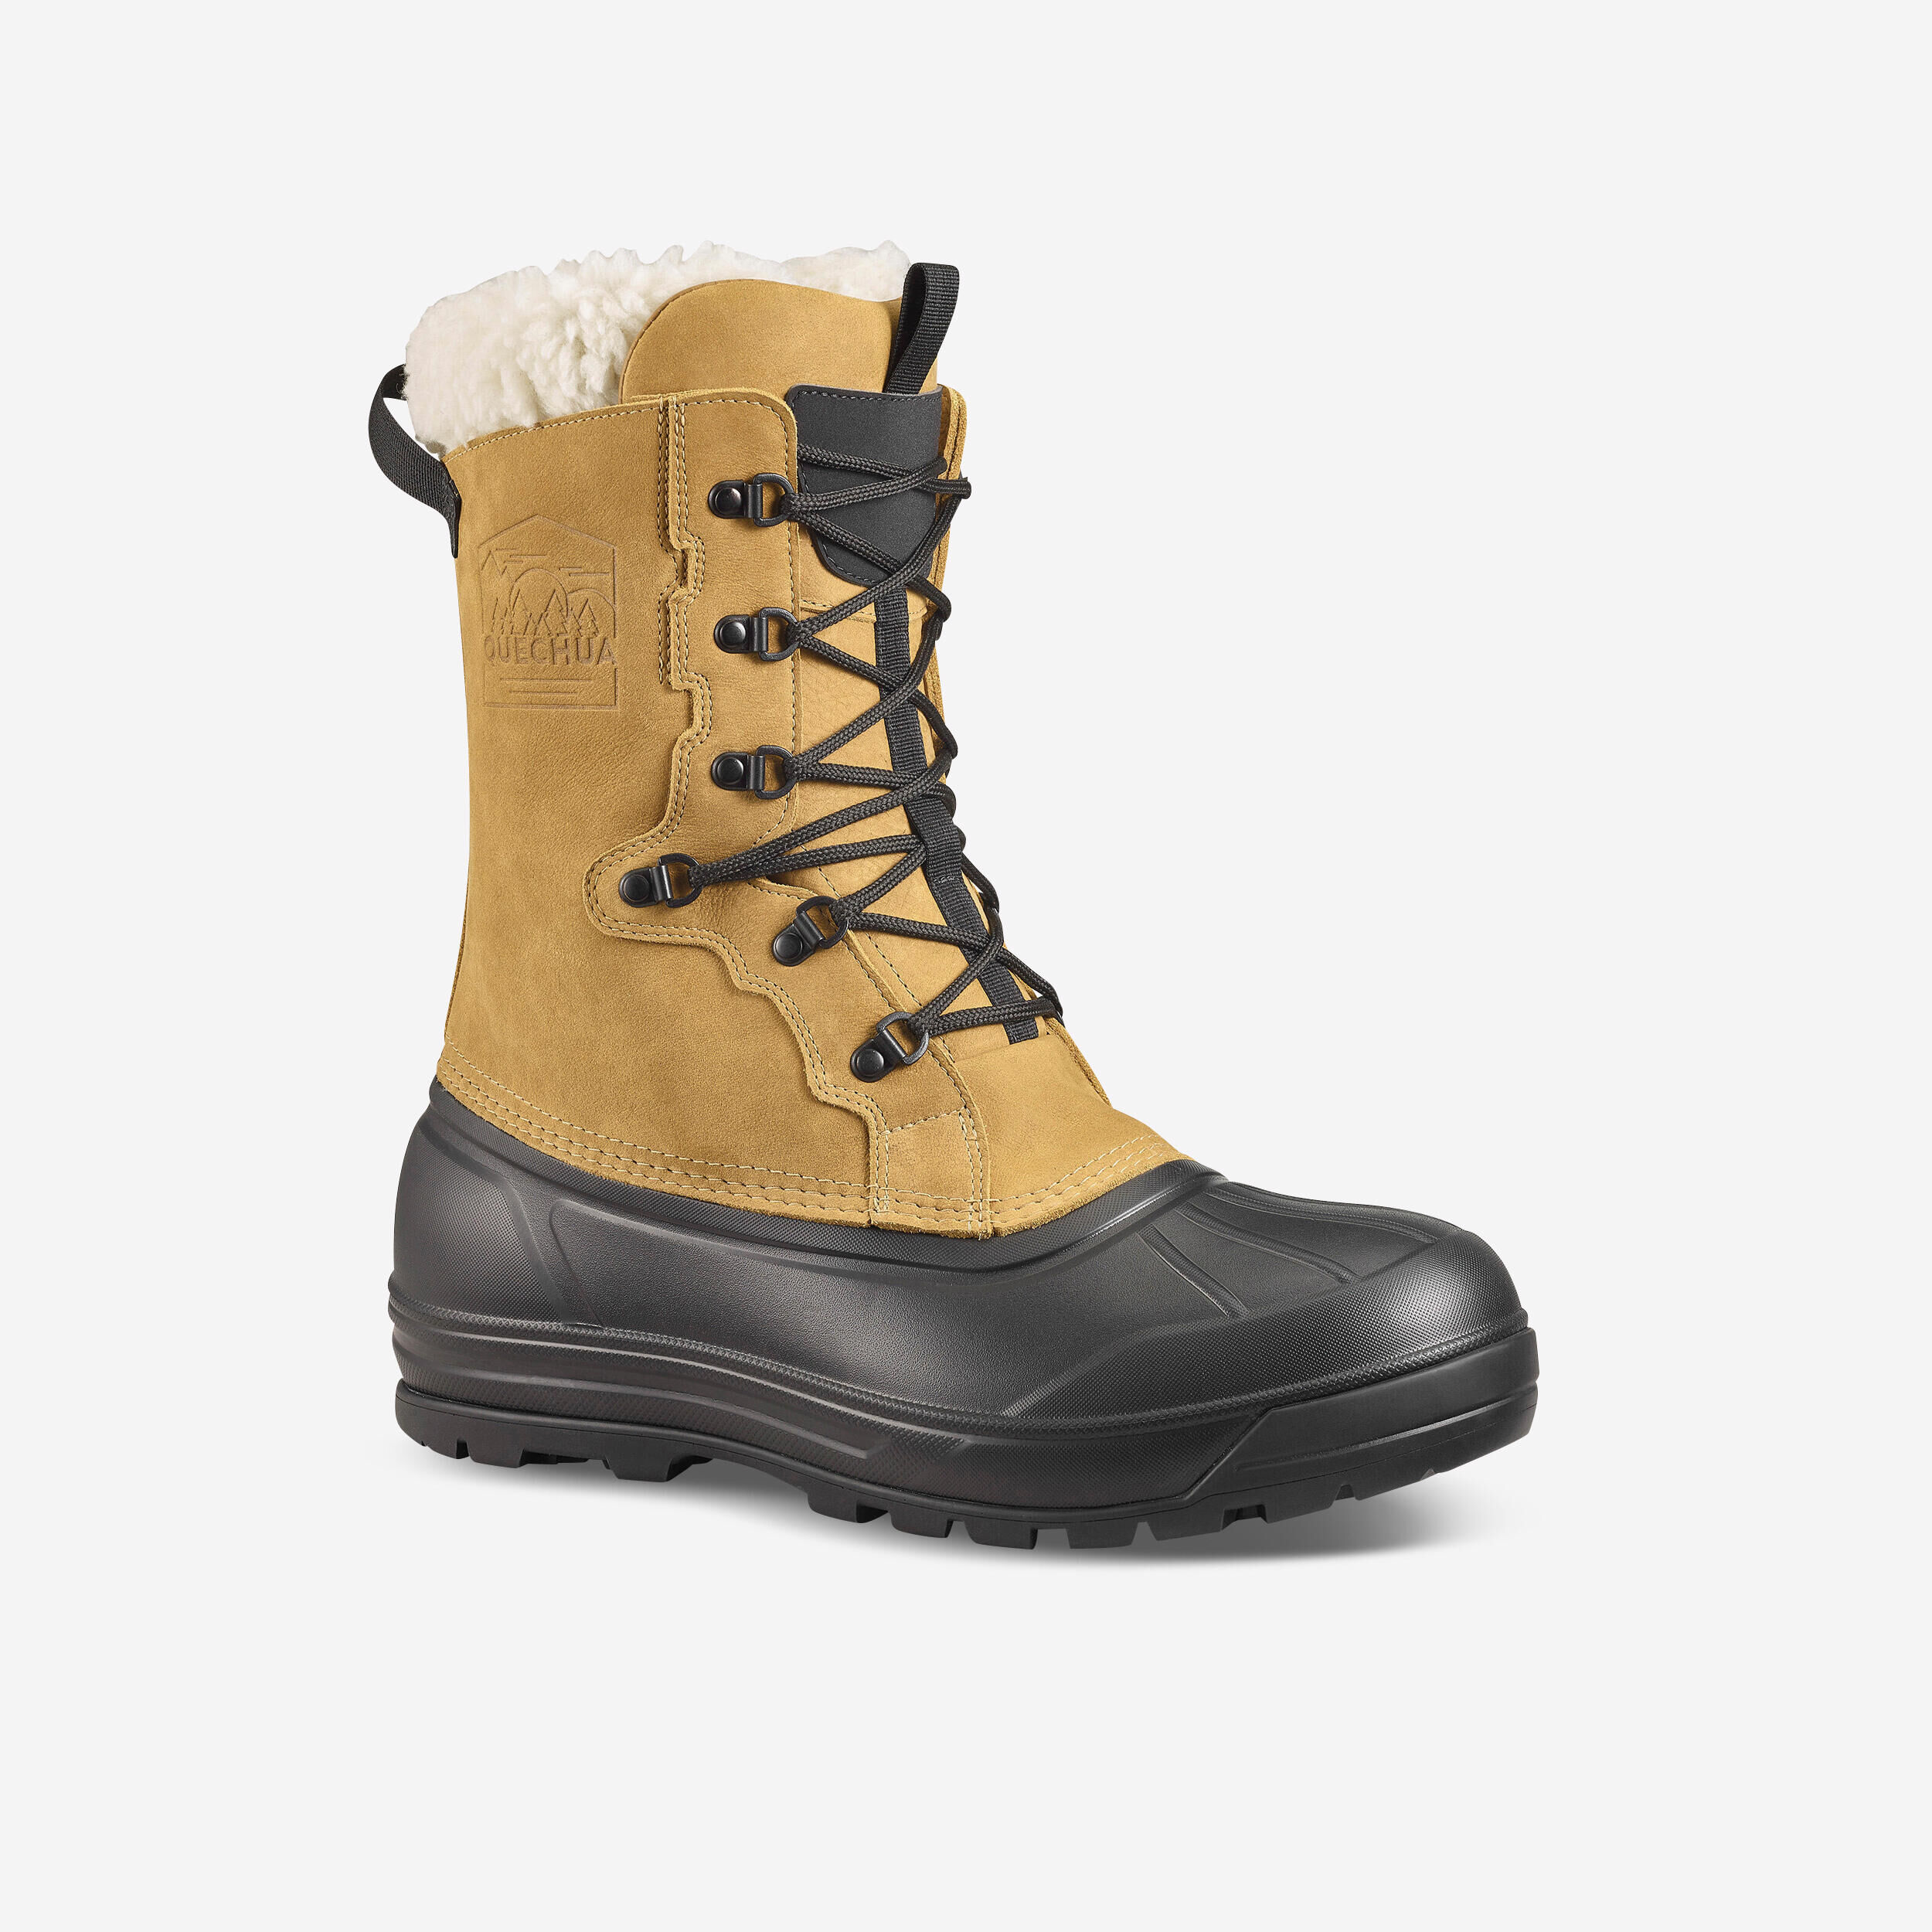 QUECHUA Leather Warm Waterproof Snow Boots  - SH900 lace-up - Men’s